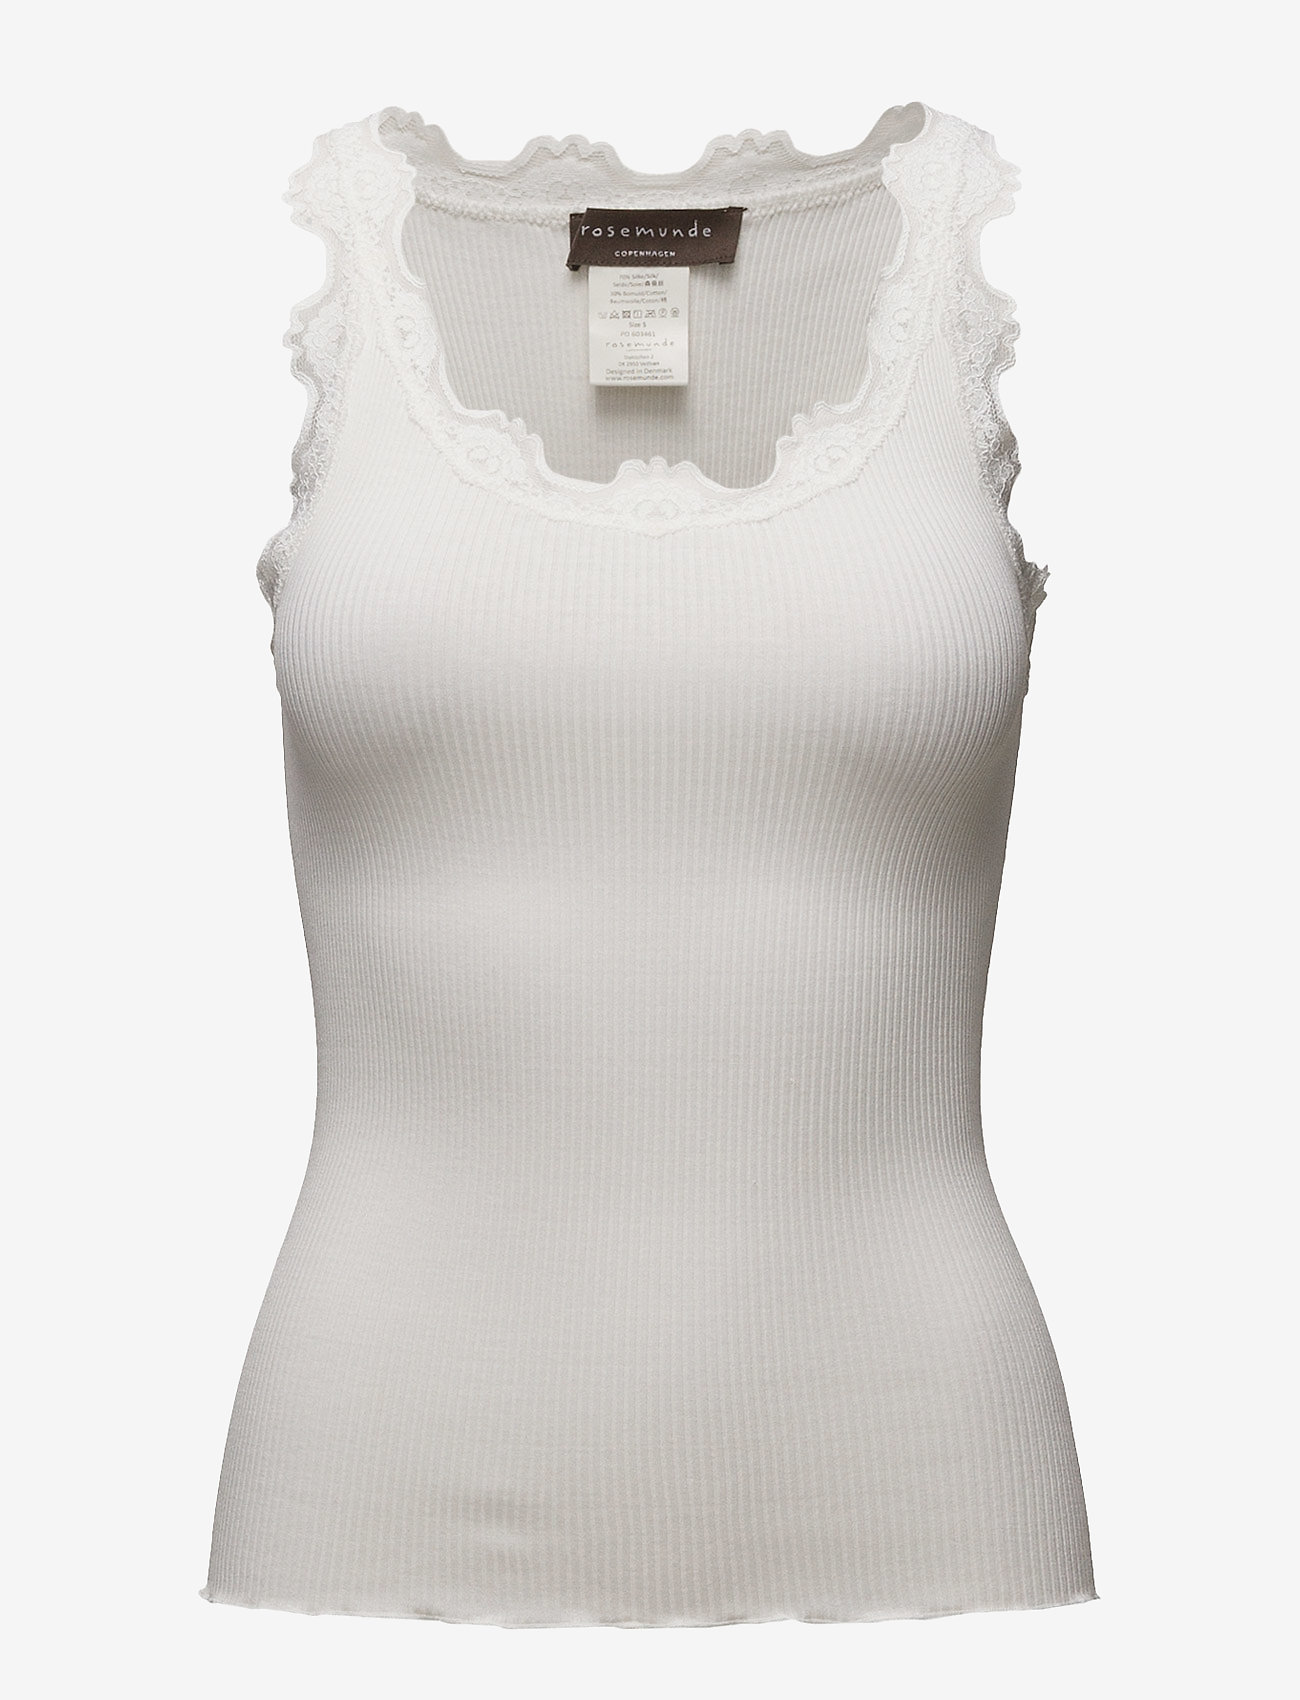 Rosemunde - Silk top w/ lace - sleeveless tops - new white - 0